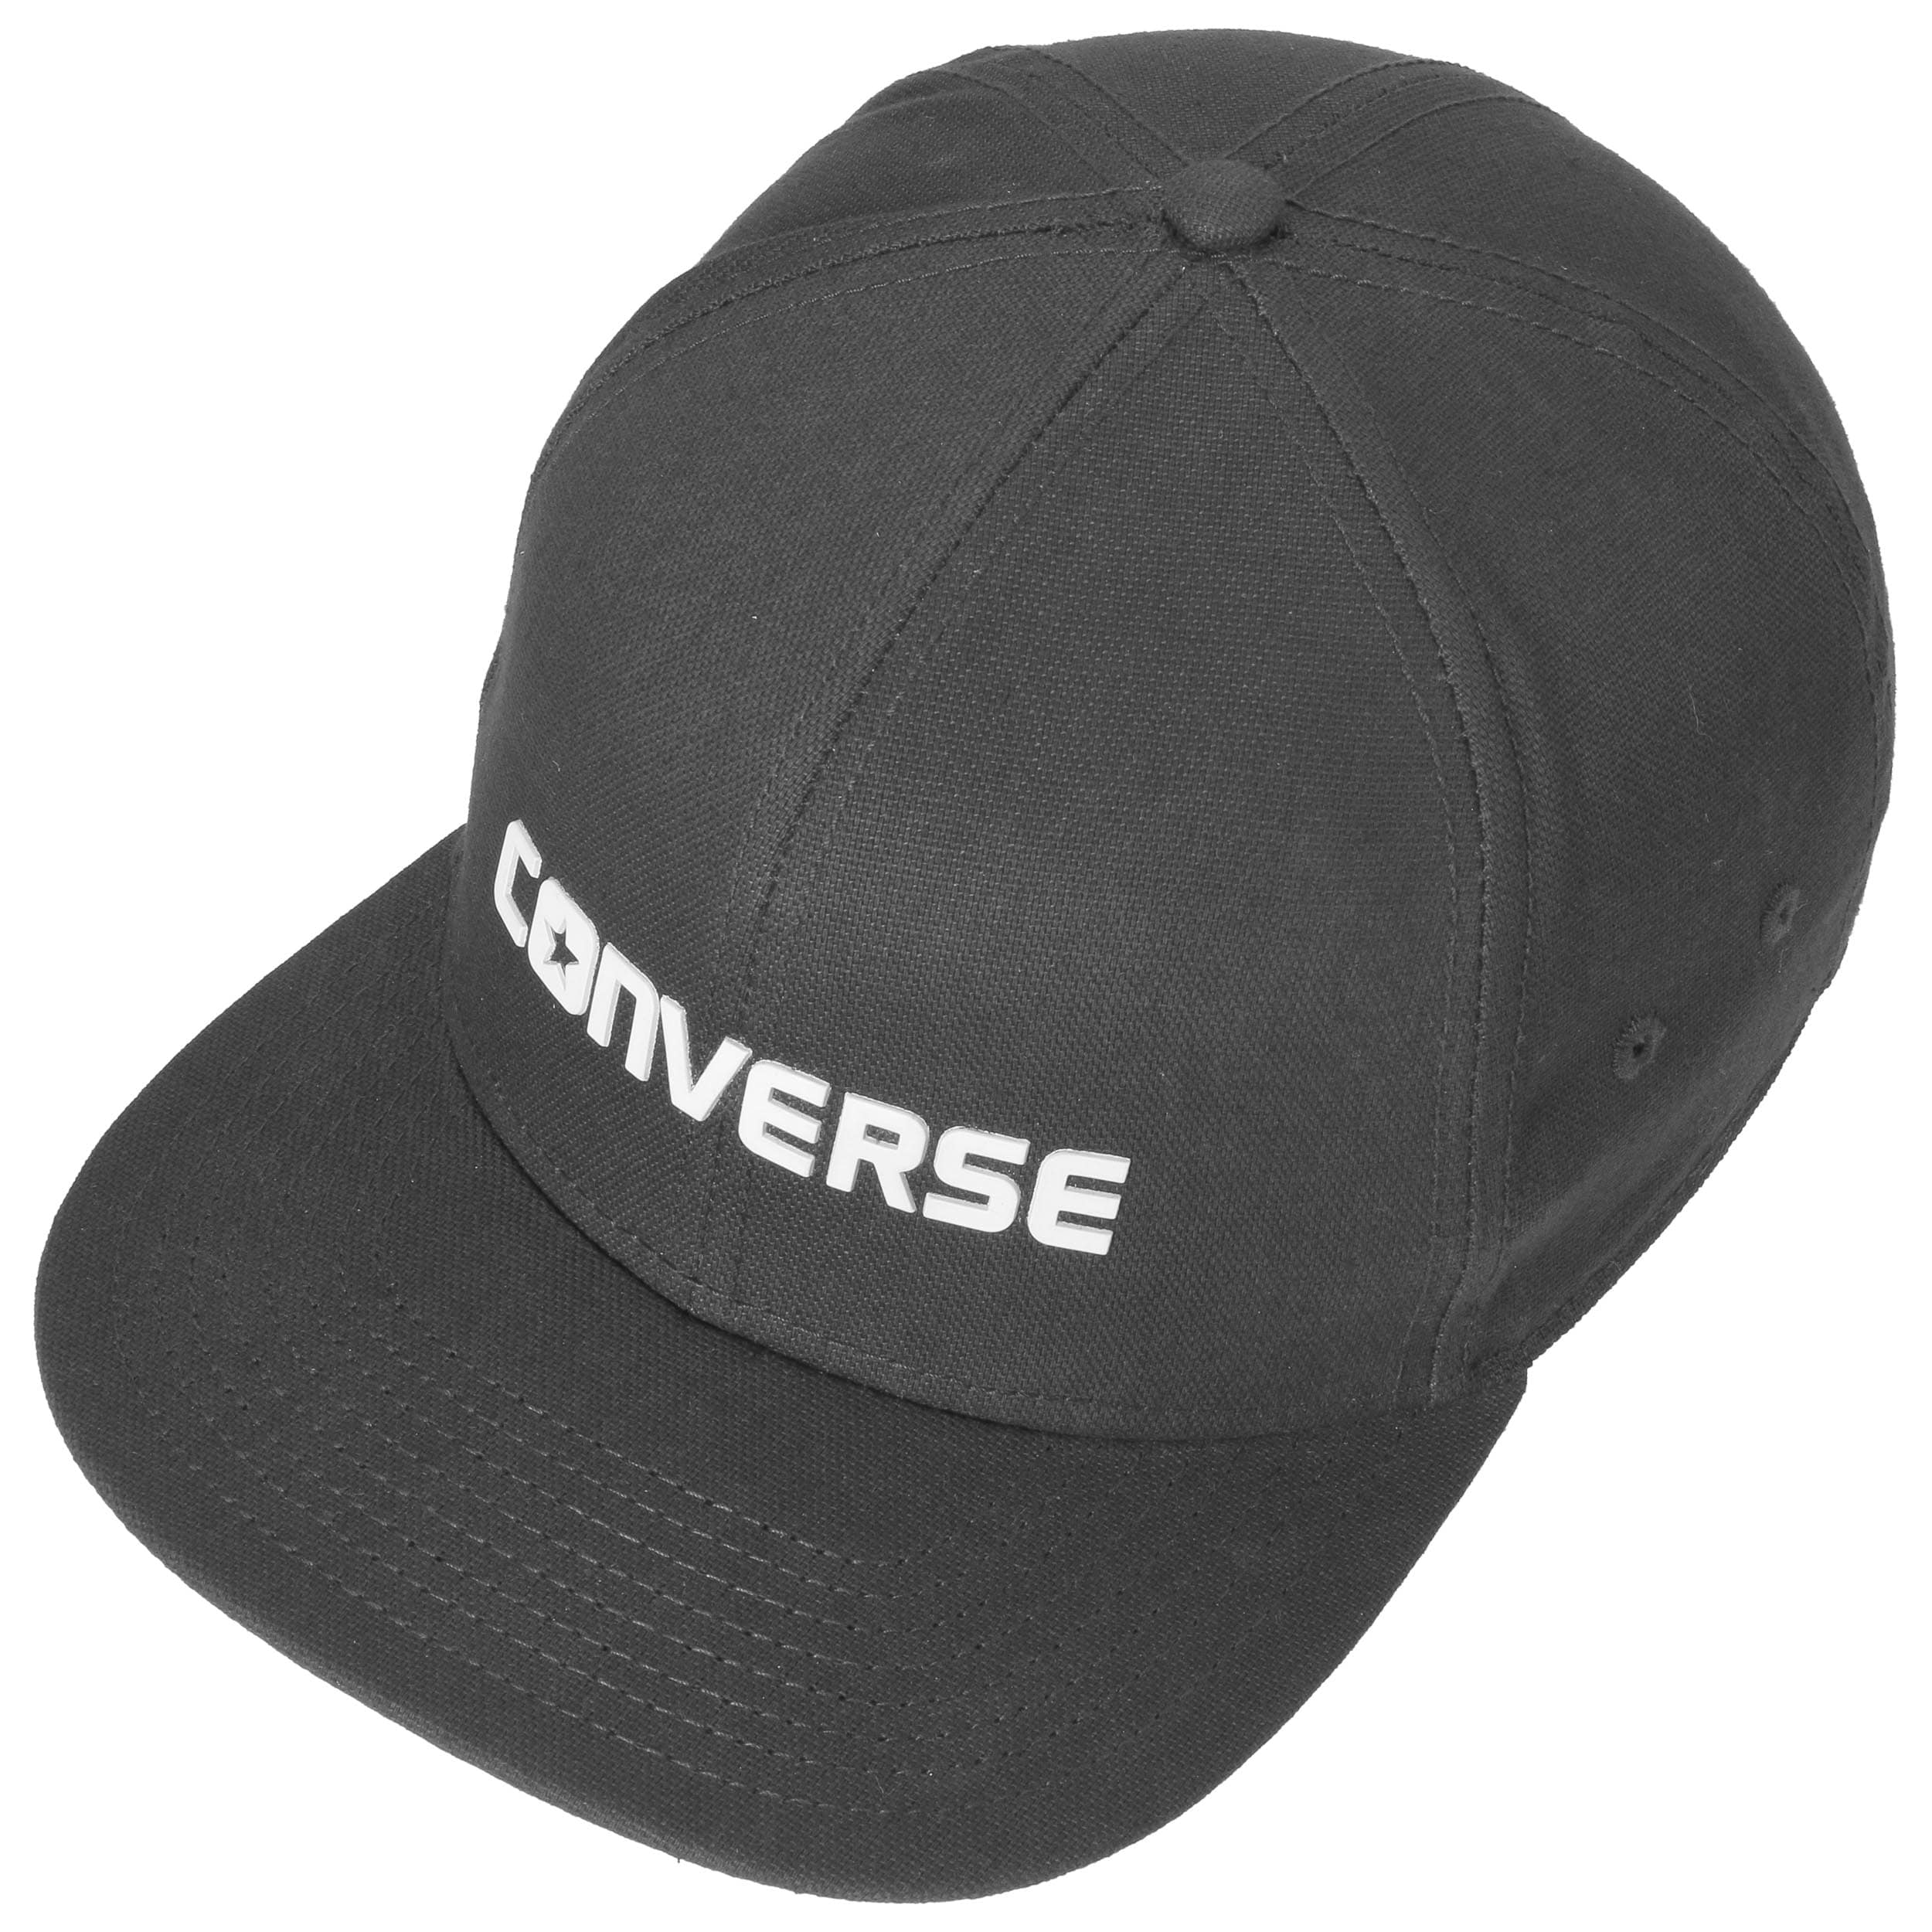 converse hat